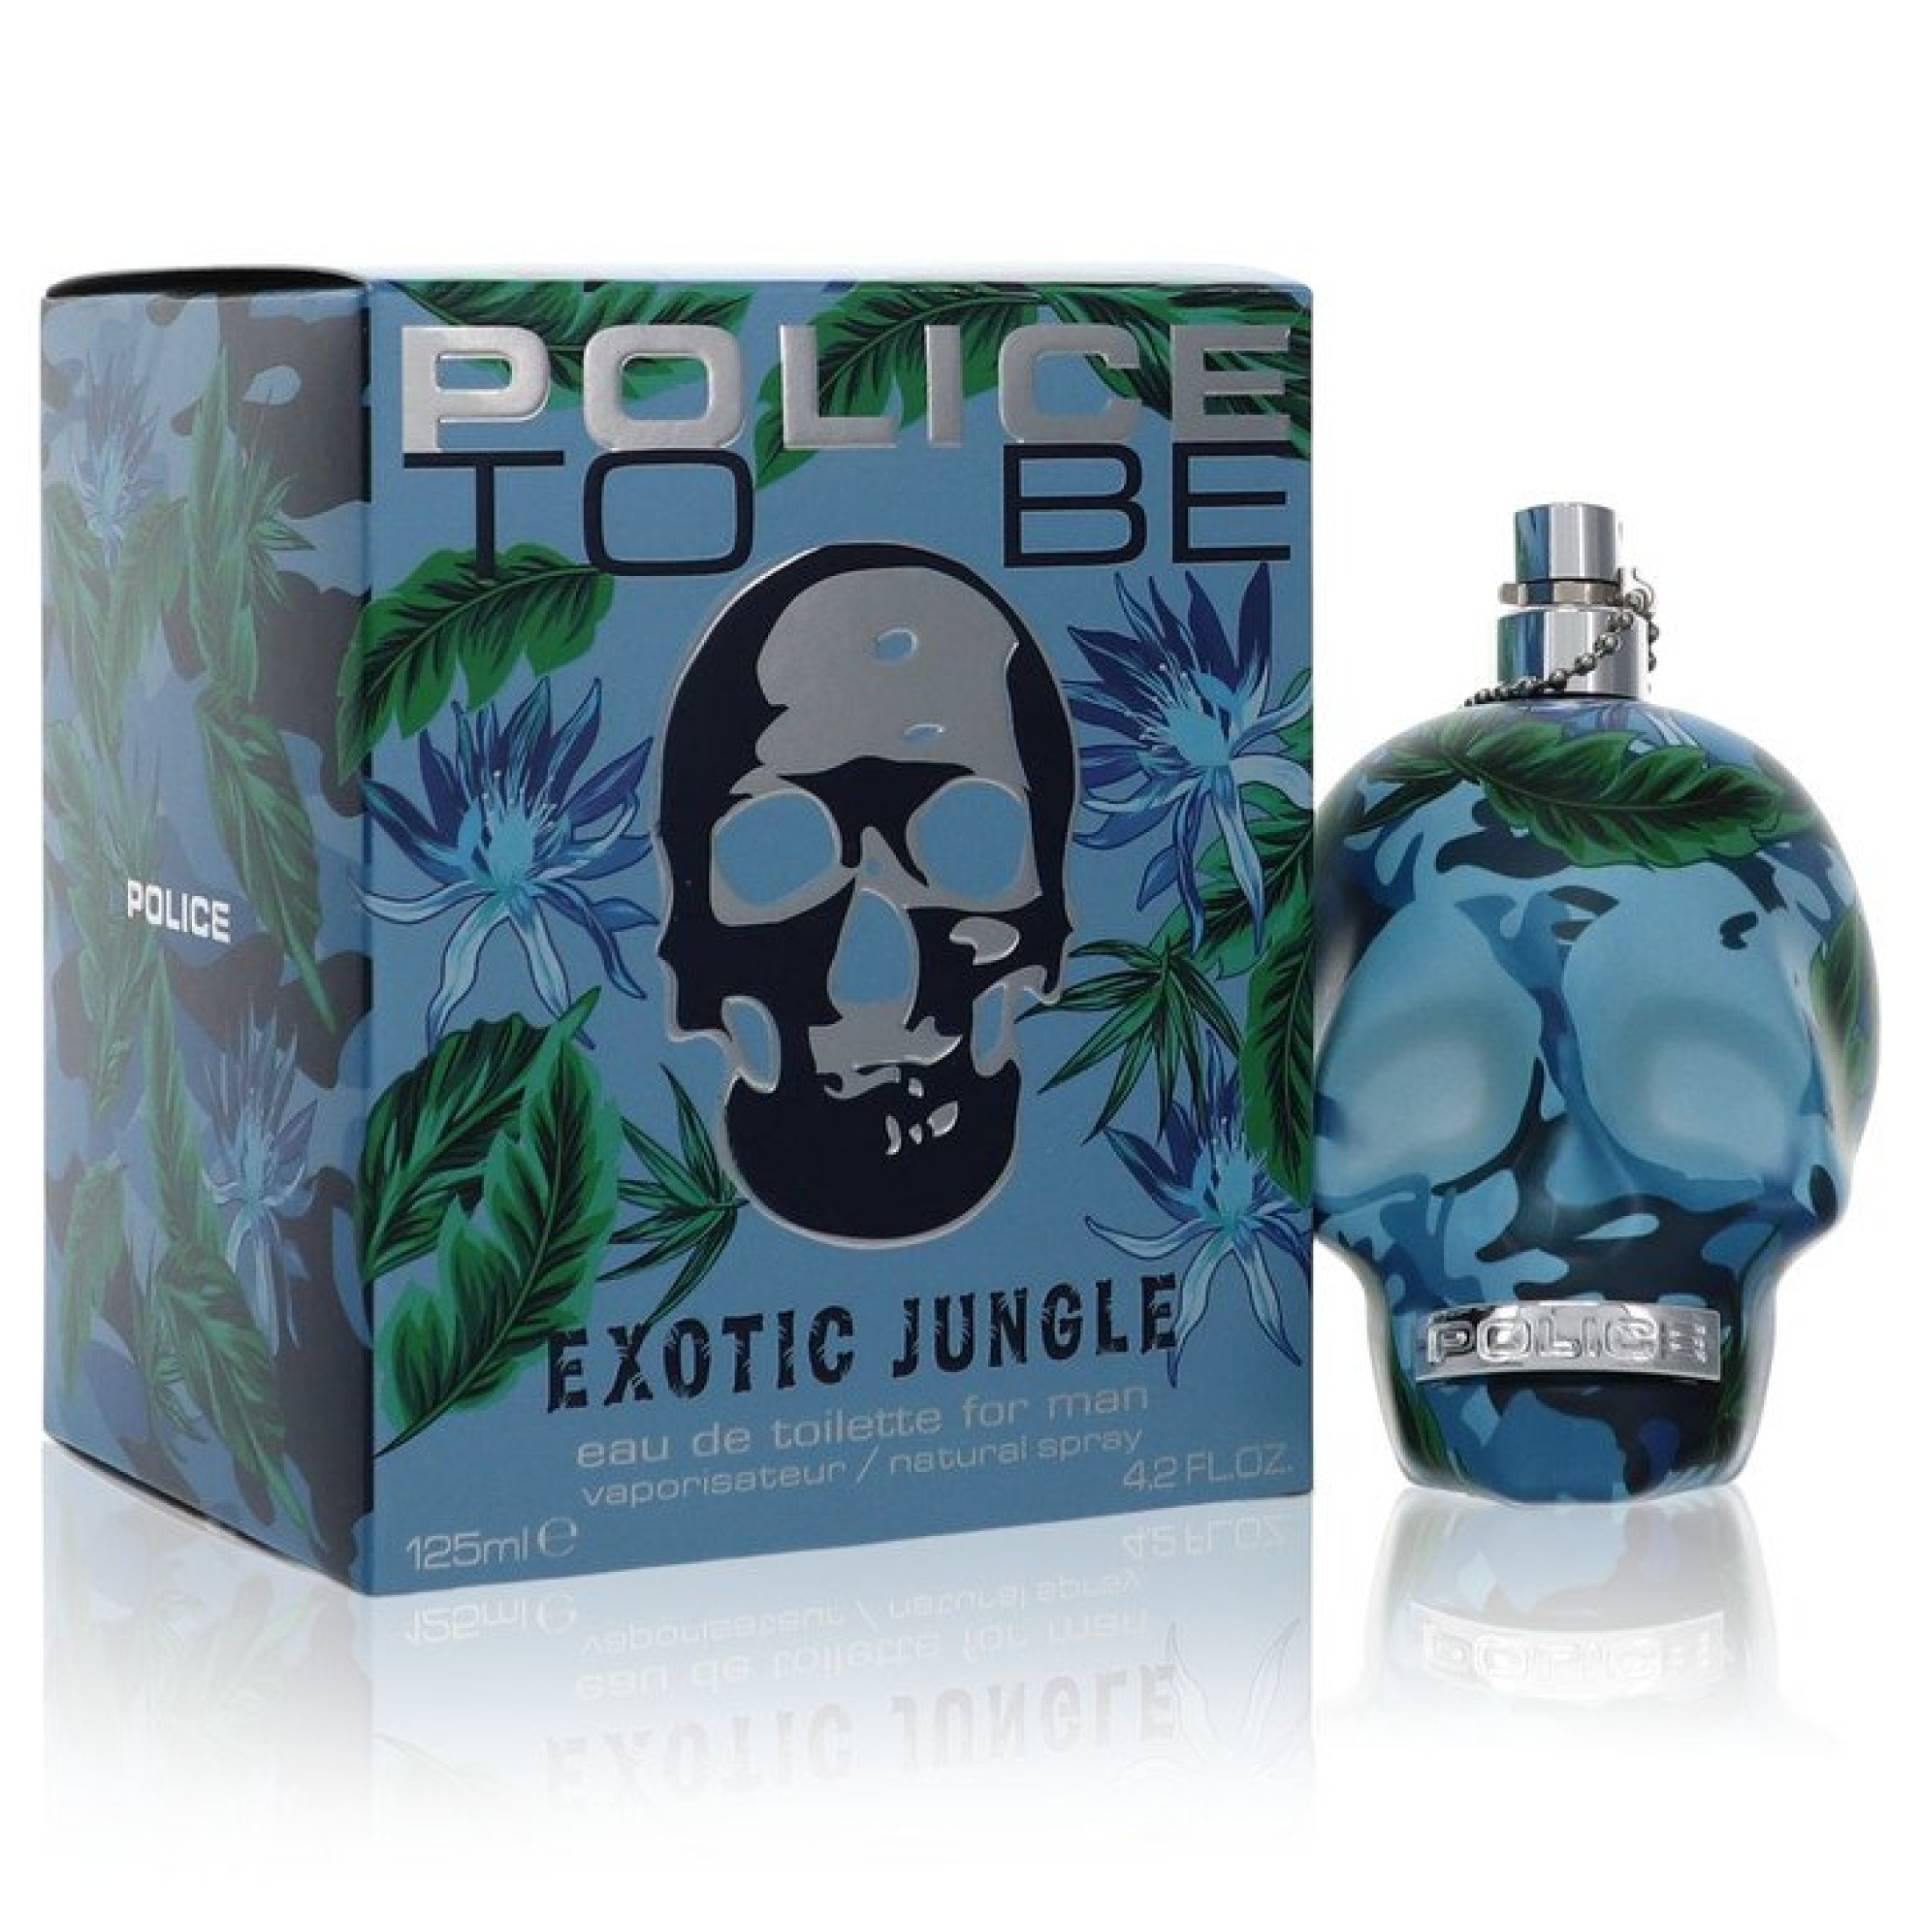 Police Colognes Police To Be Exotic Jungle Eau De Toilette Spray 125 ml von Police Colognes